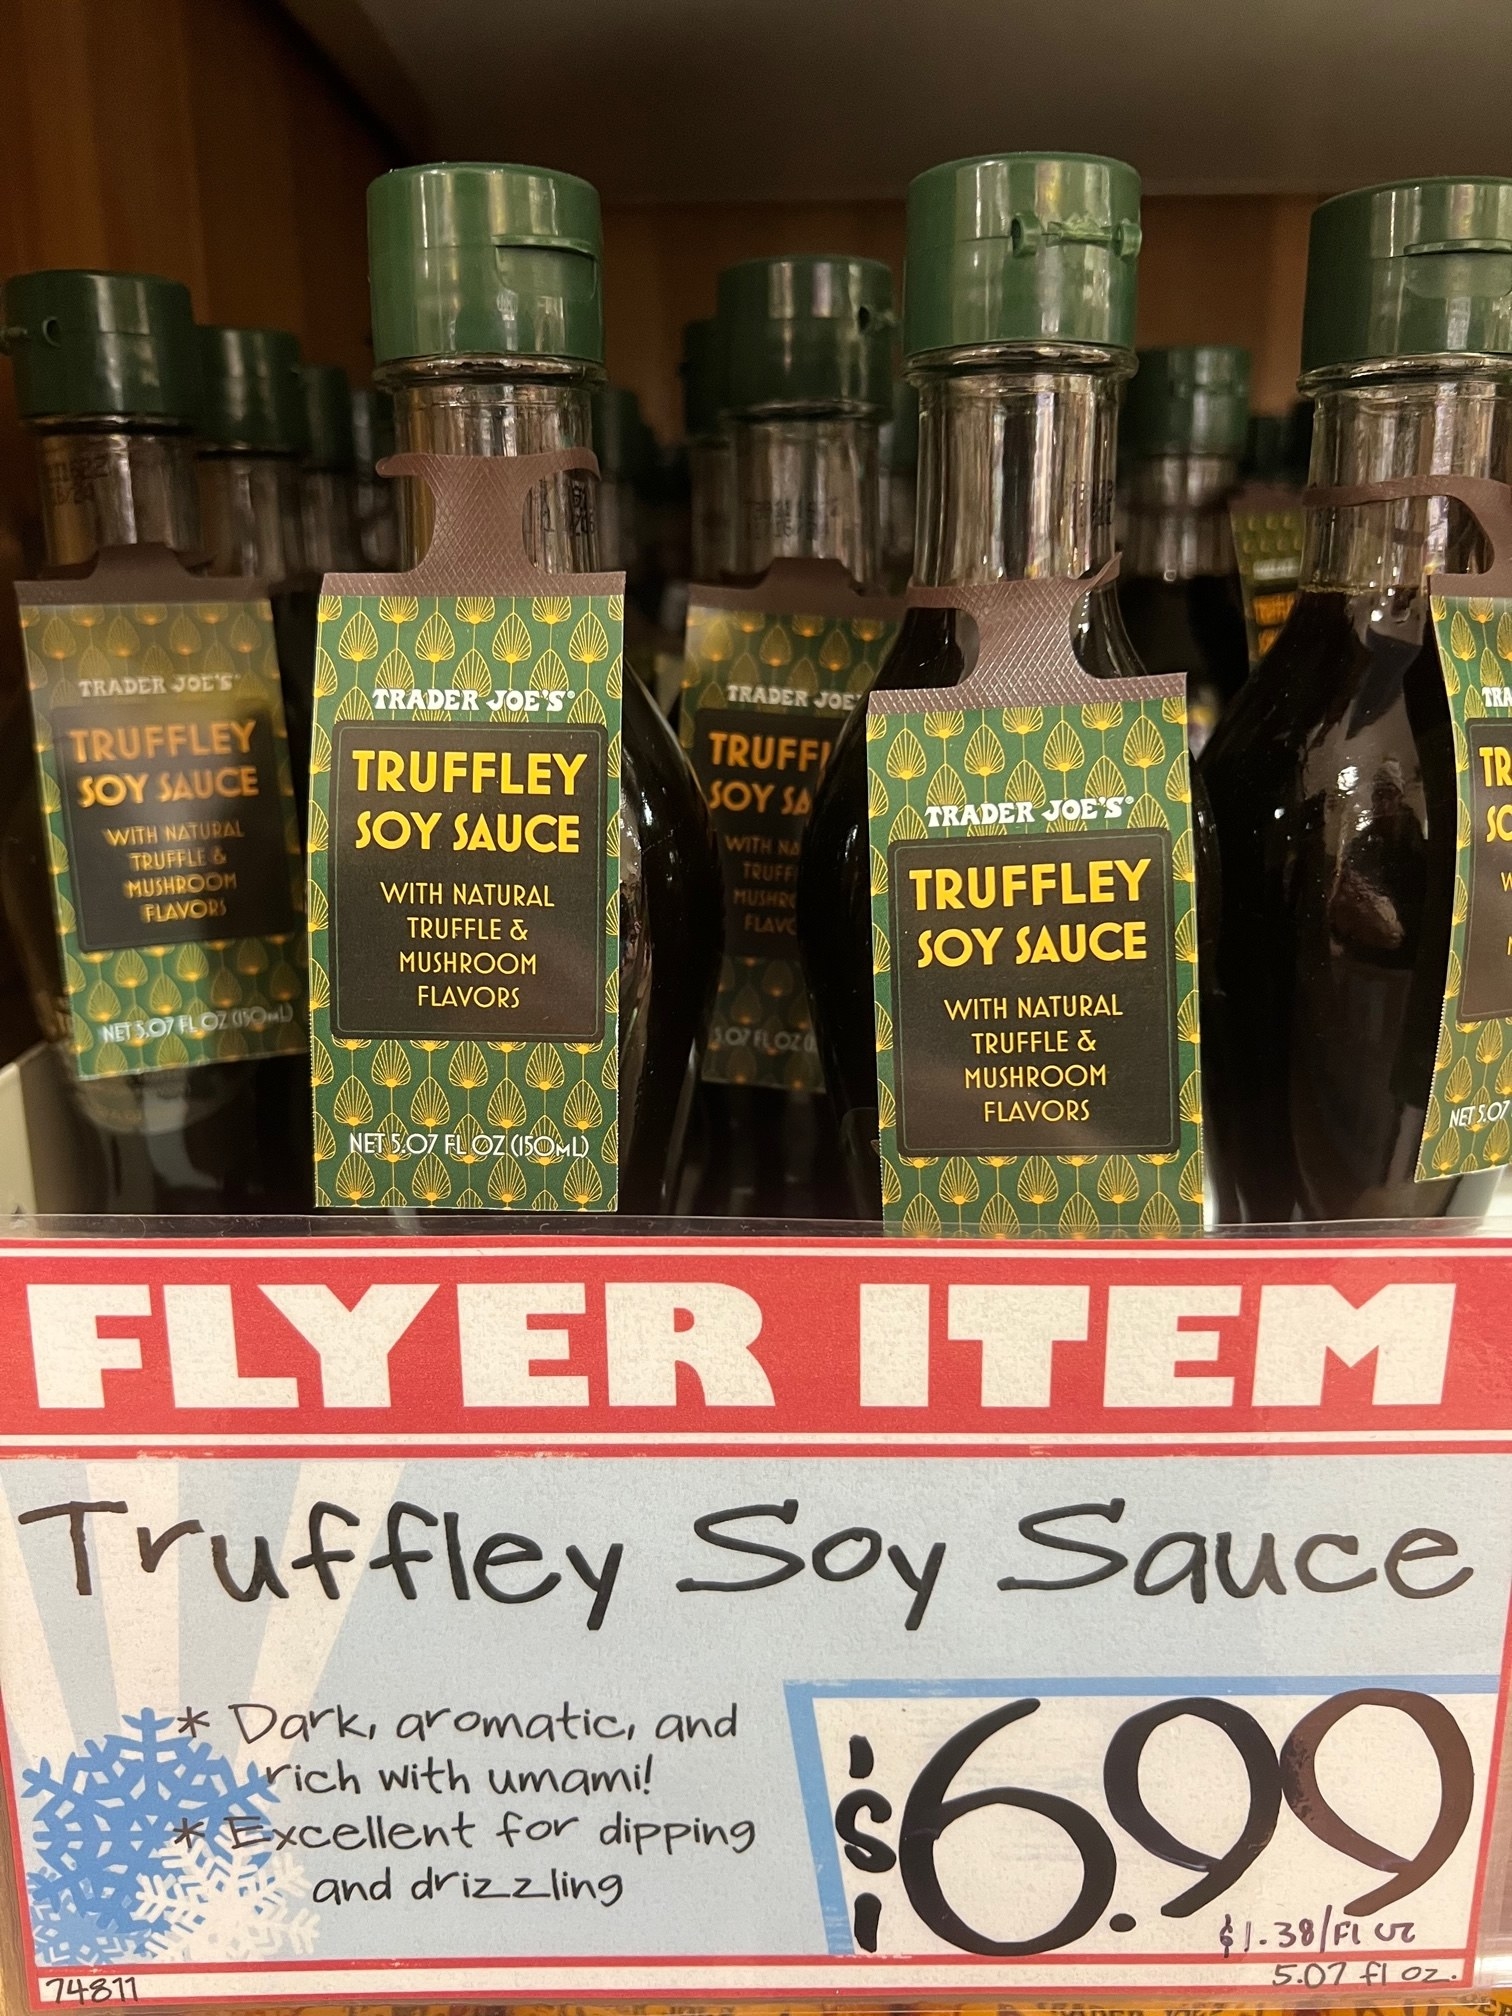 Truffley Soy Sauce